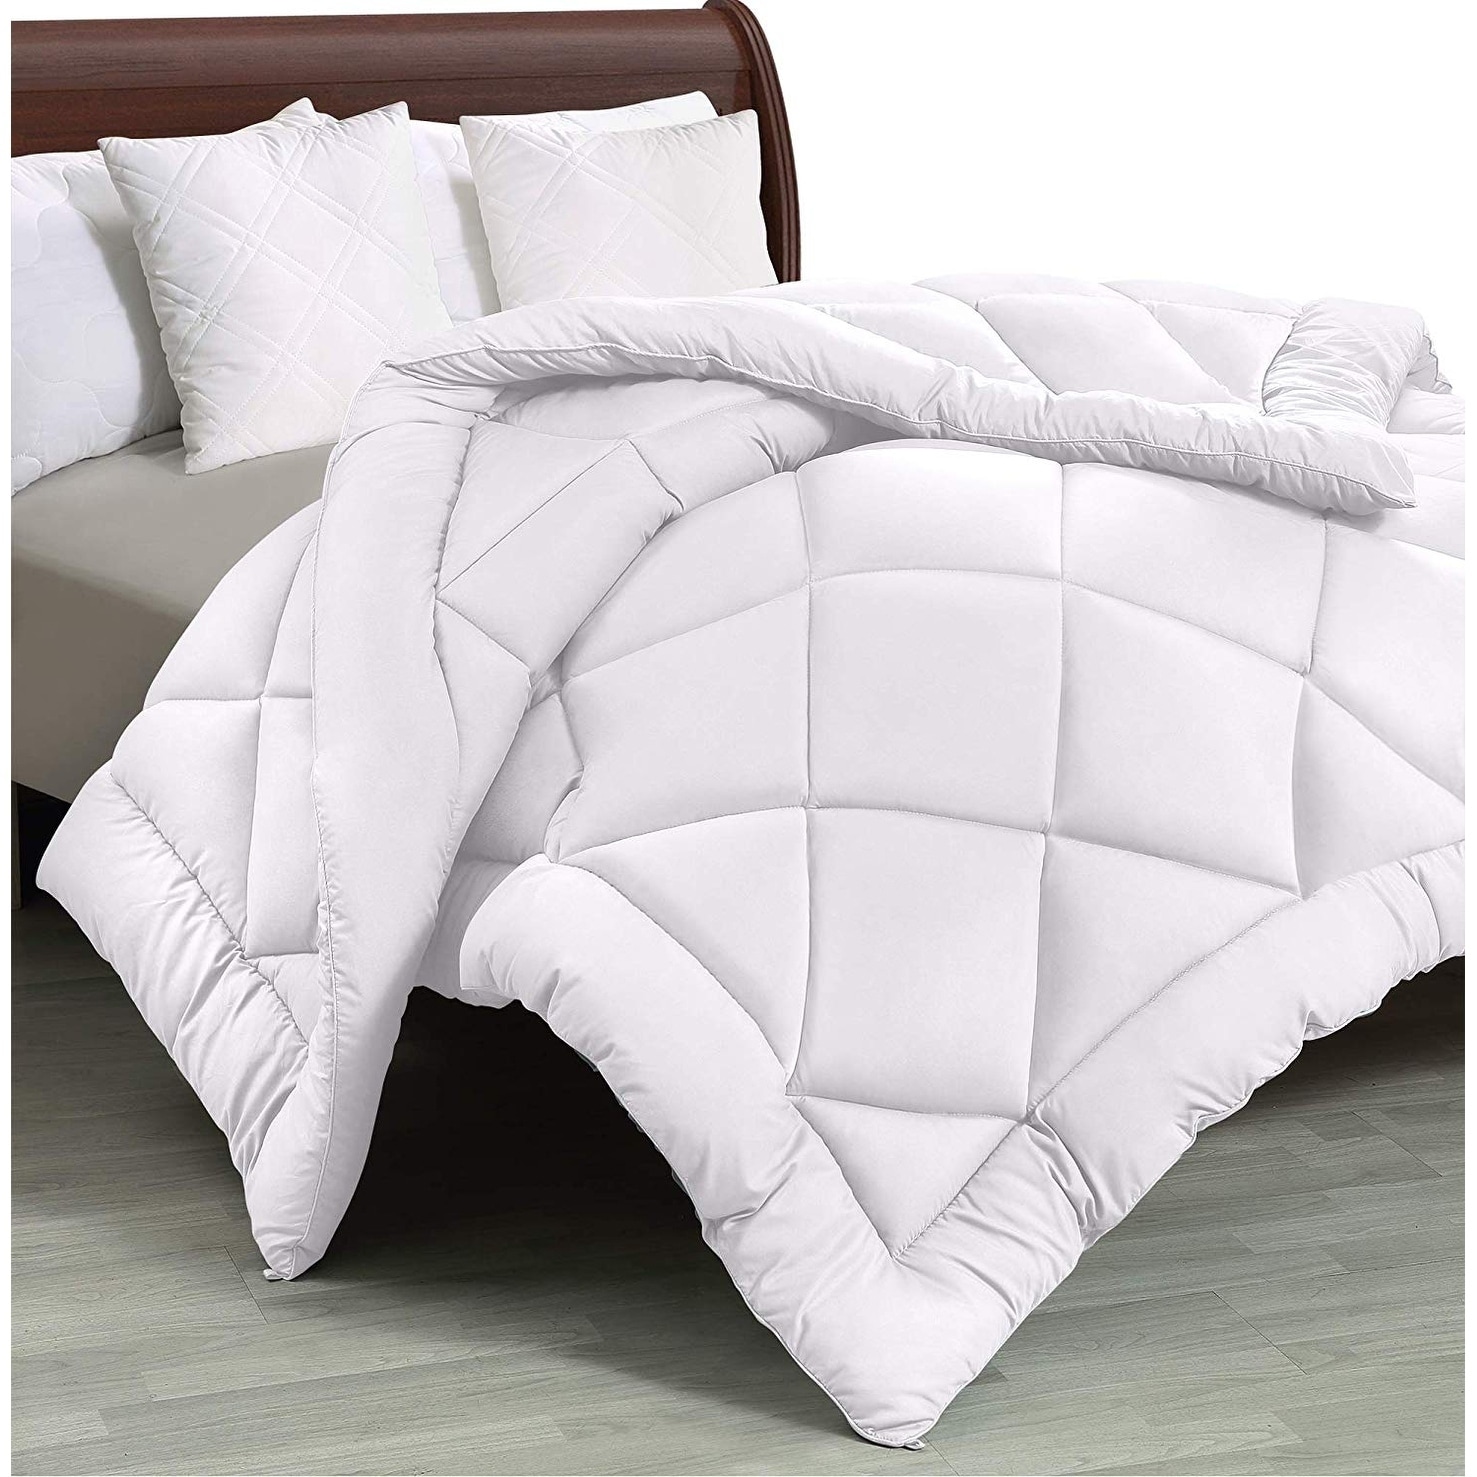 Shop Bedding All Season Quilted Duvet Insert Goose Down Comforter